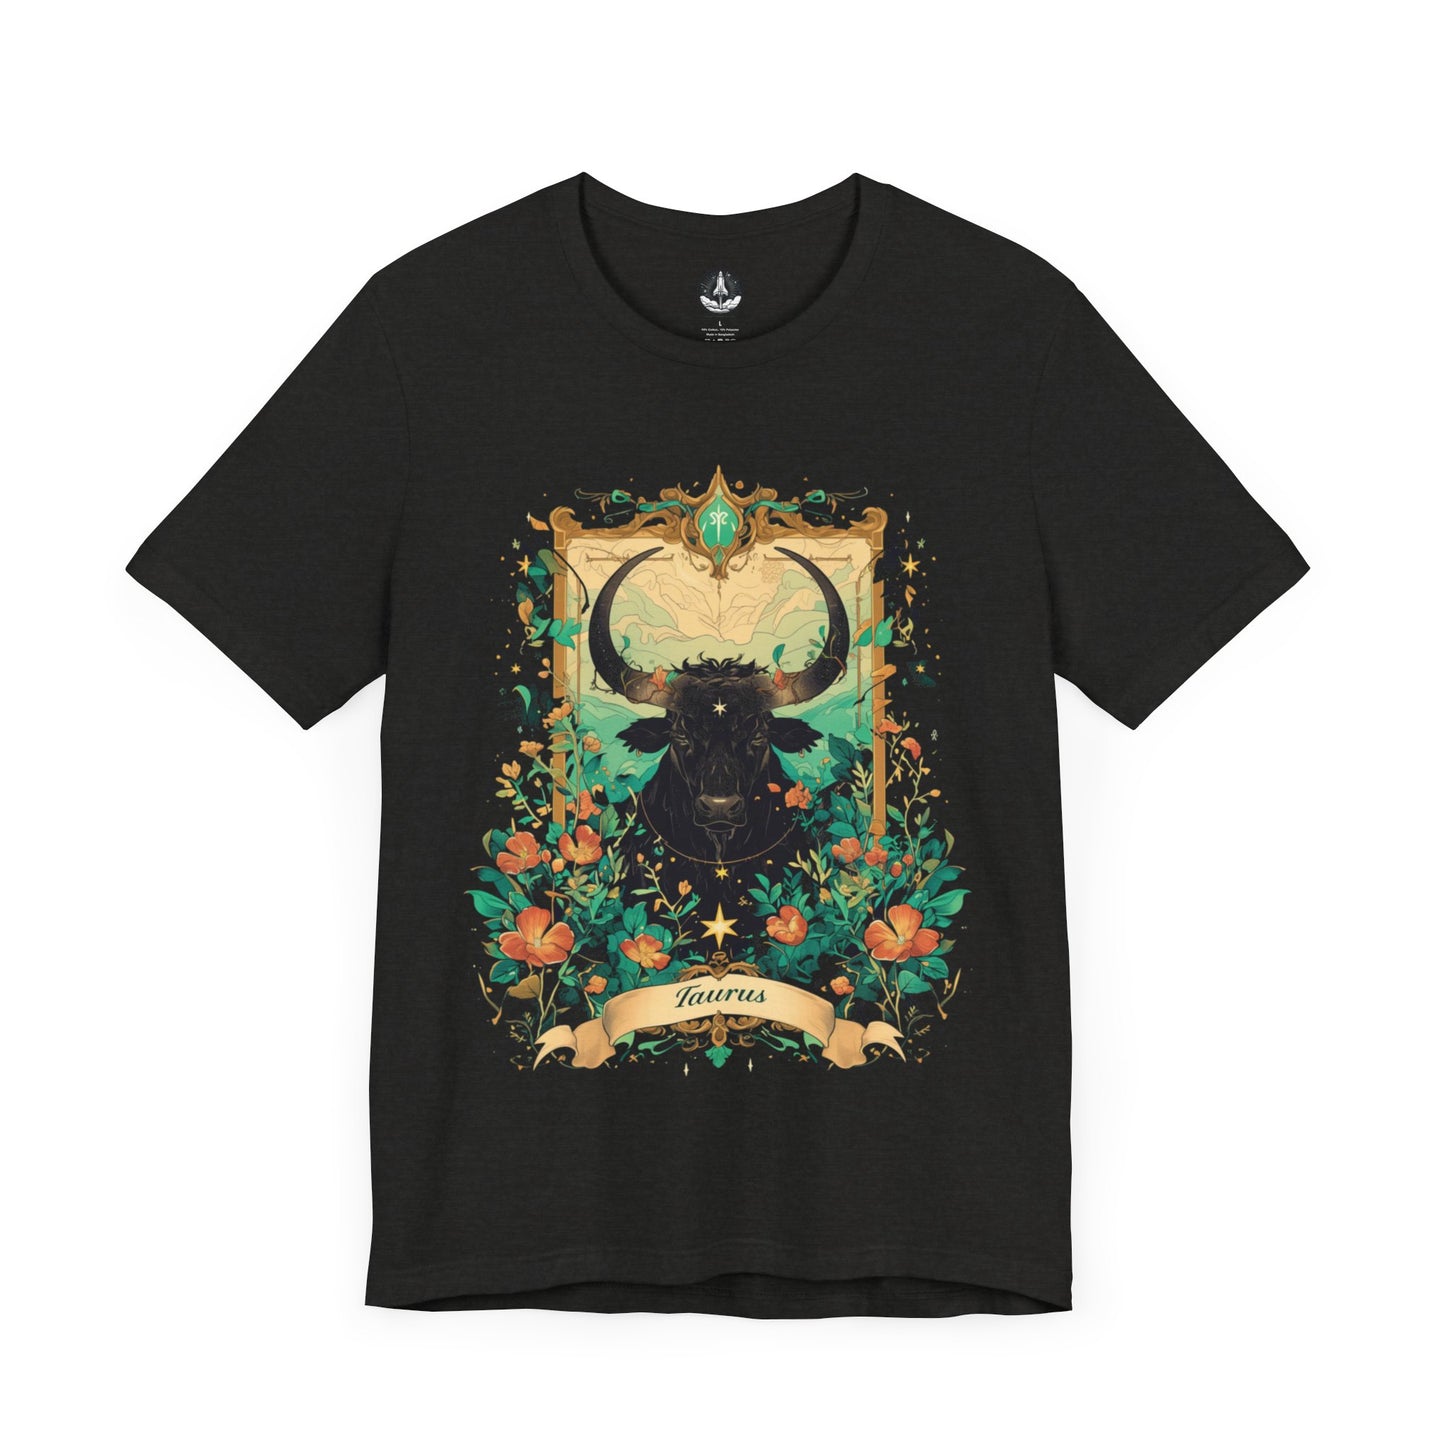 Taurus Blossom: Celestial Garden Astrology T-Shirt